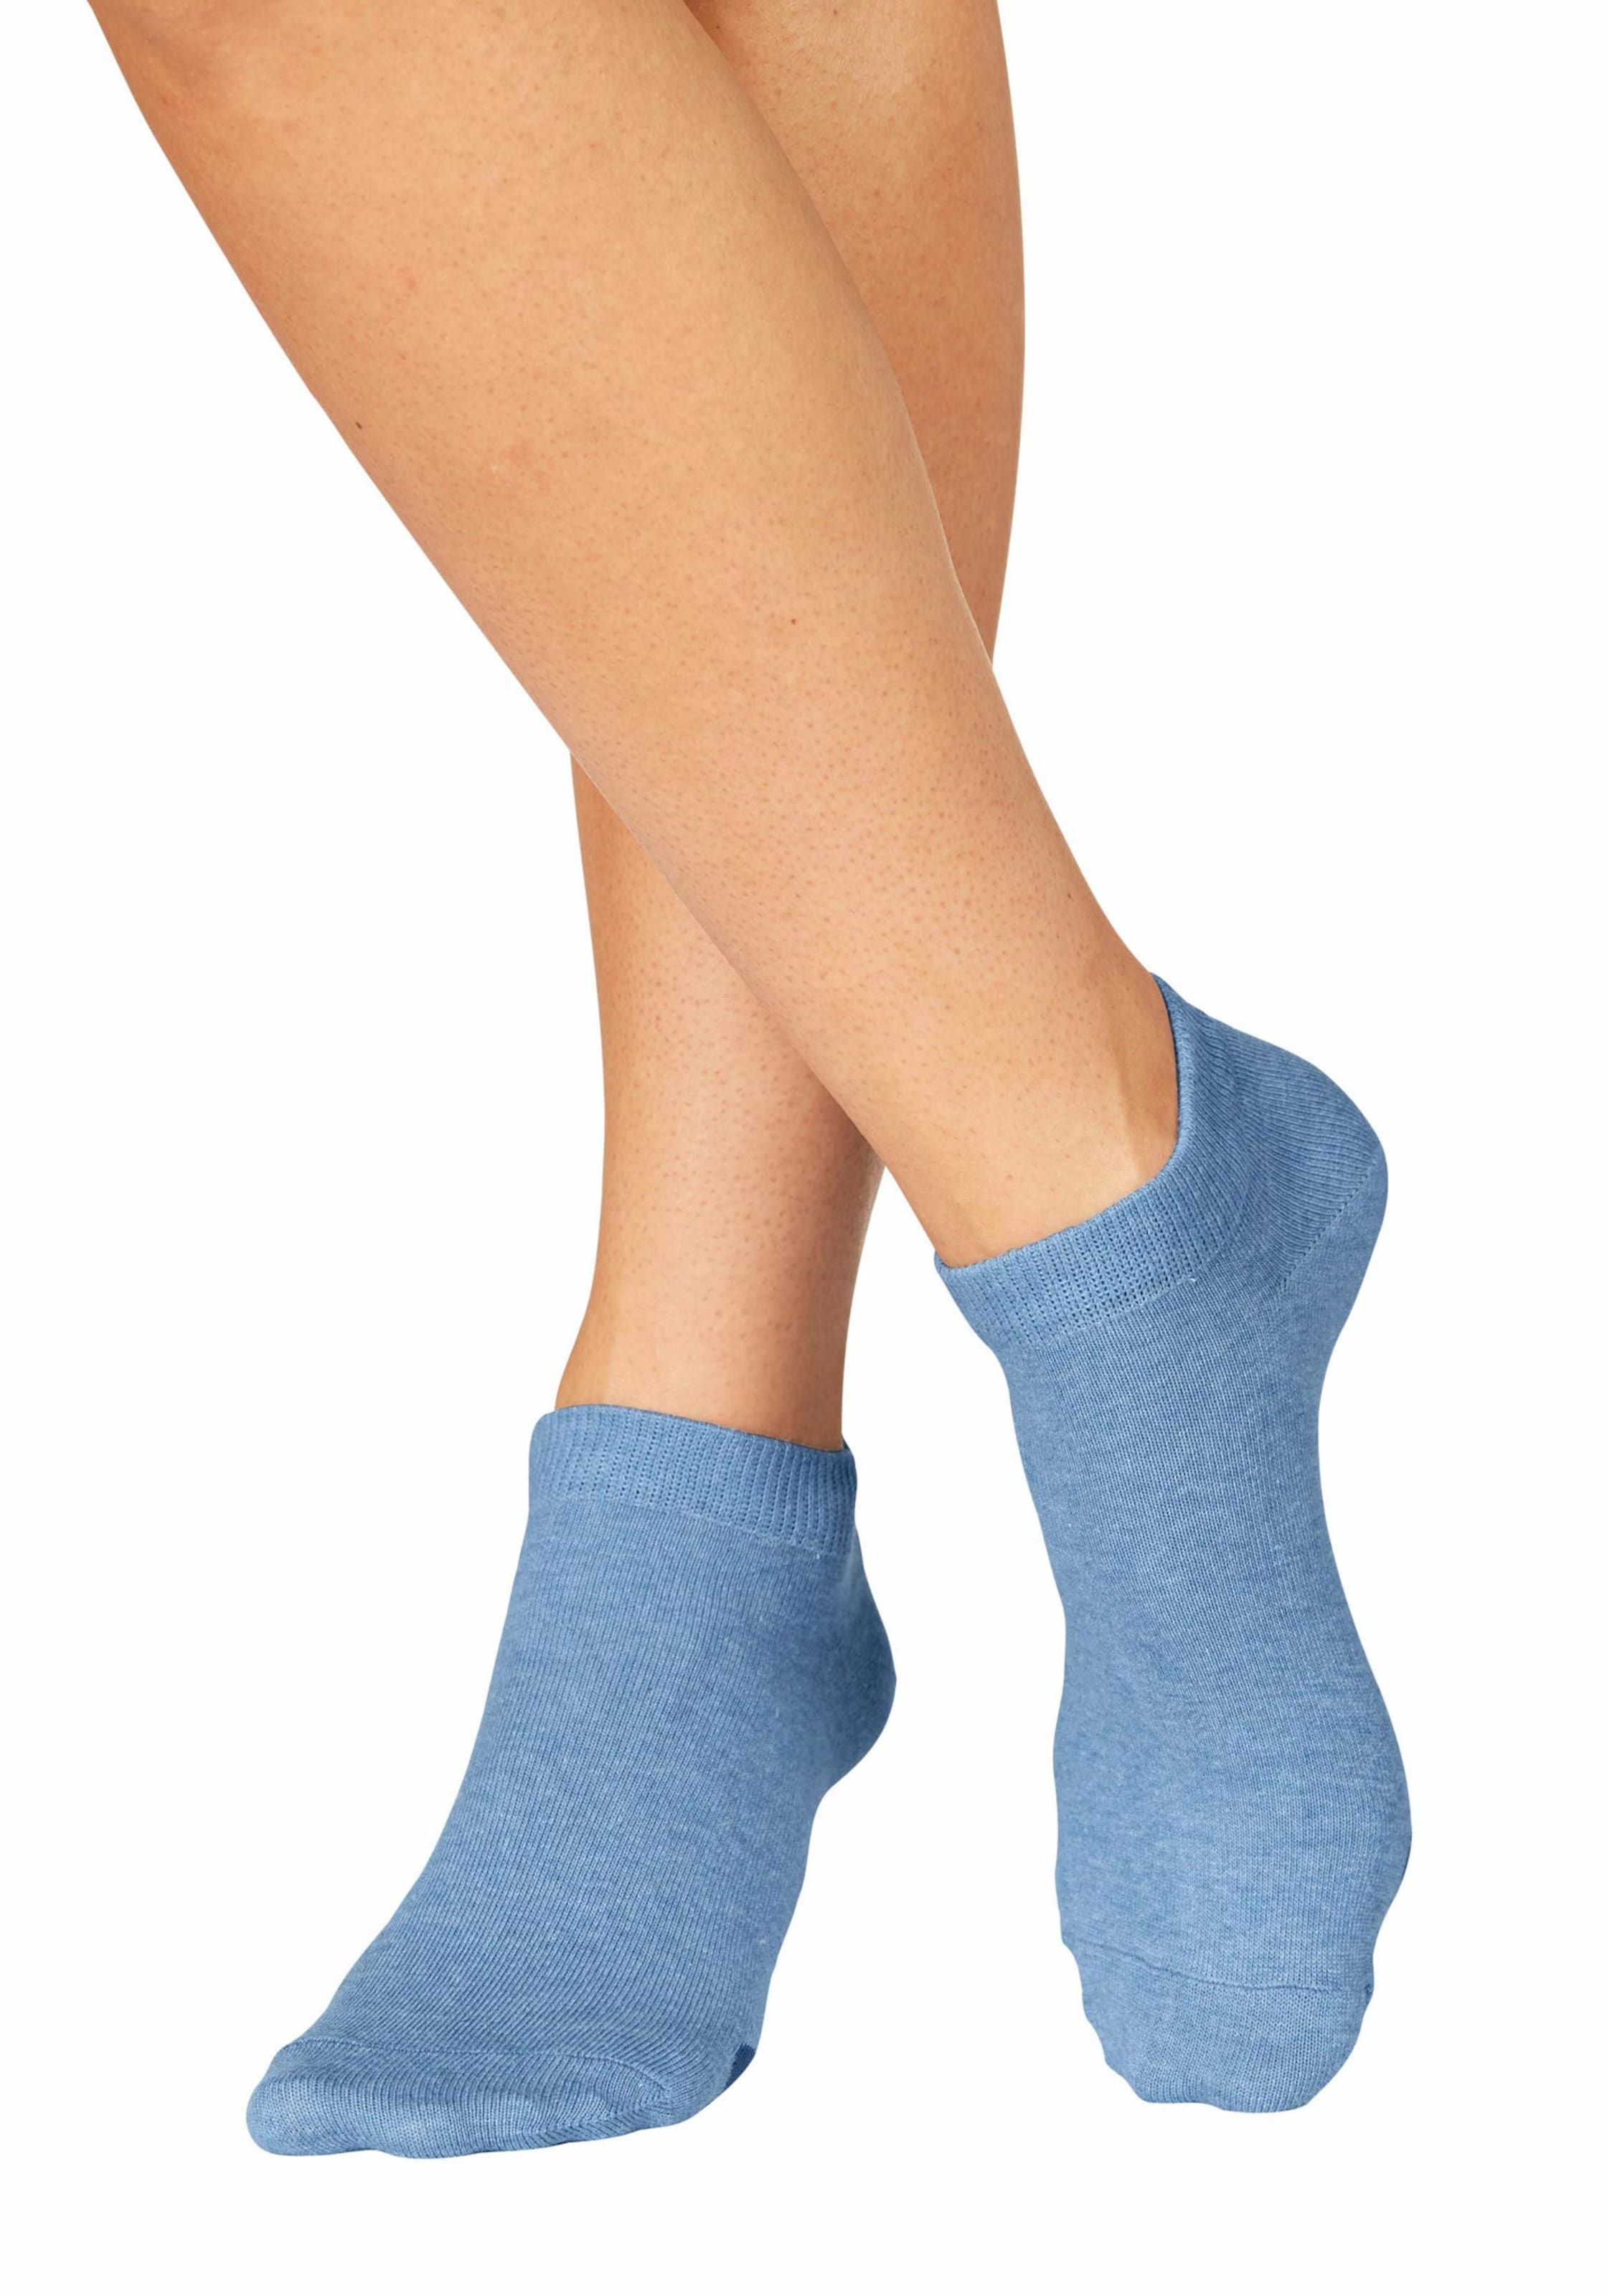 Wäsche Strümpfe & Socken Arizona Sneakersocken in 1x blau + 1x grau-meliert + 1x dunkelblau + 1x dunkelgrau 